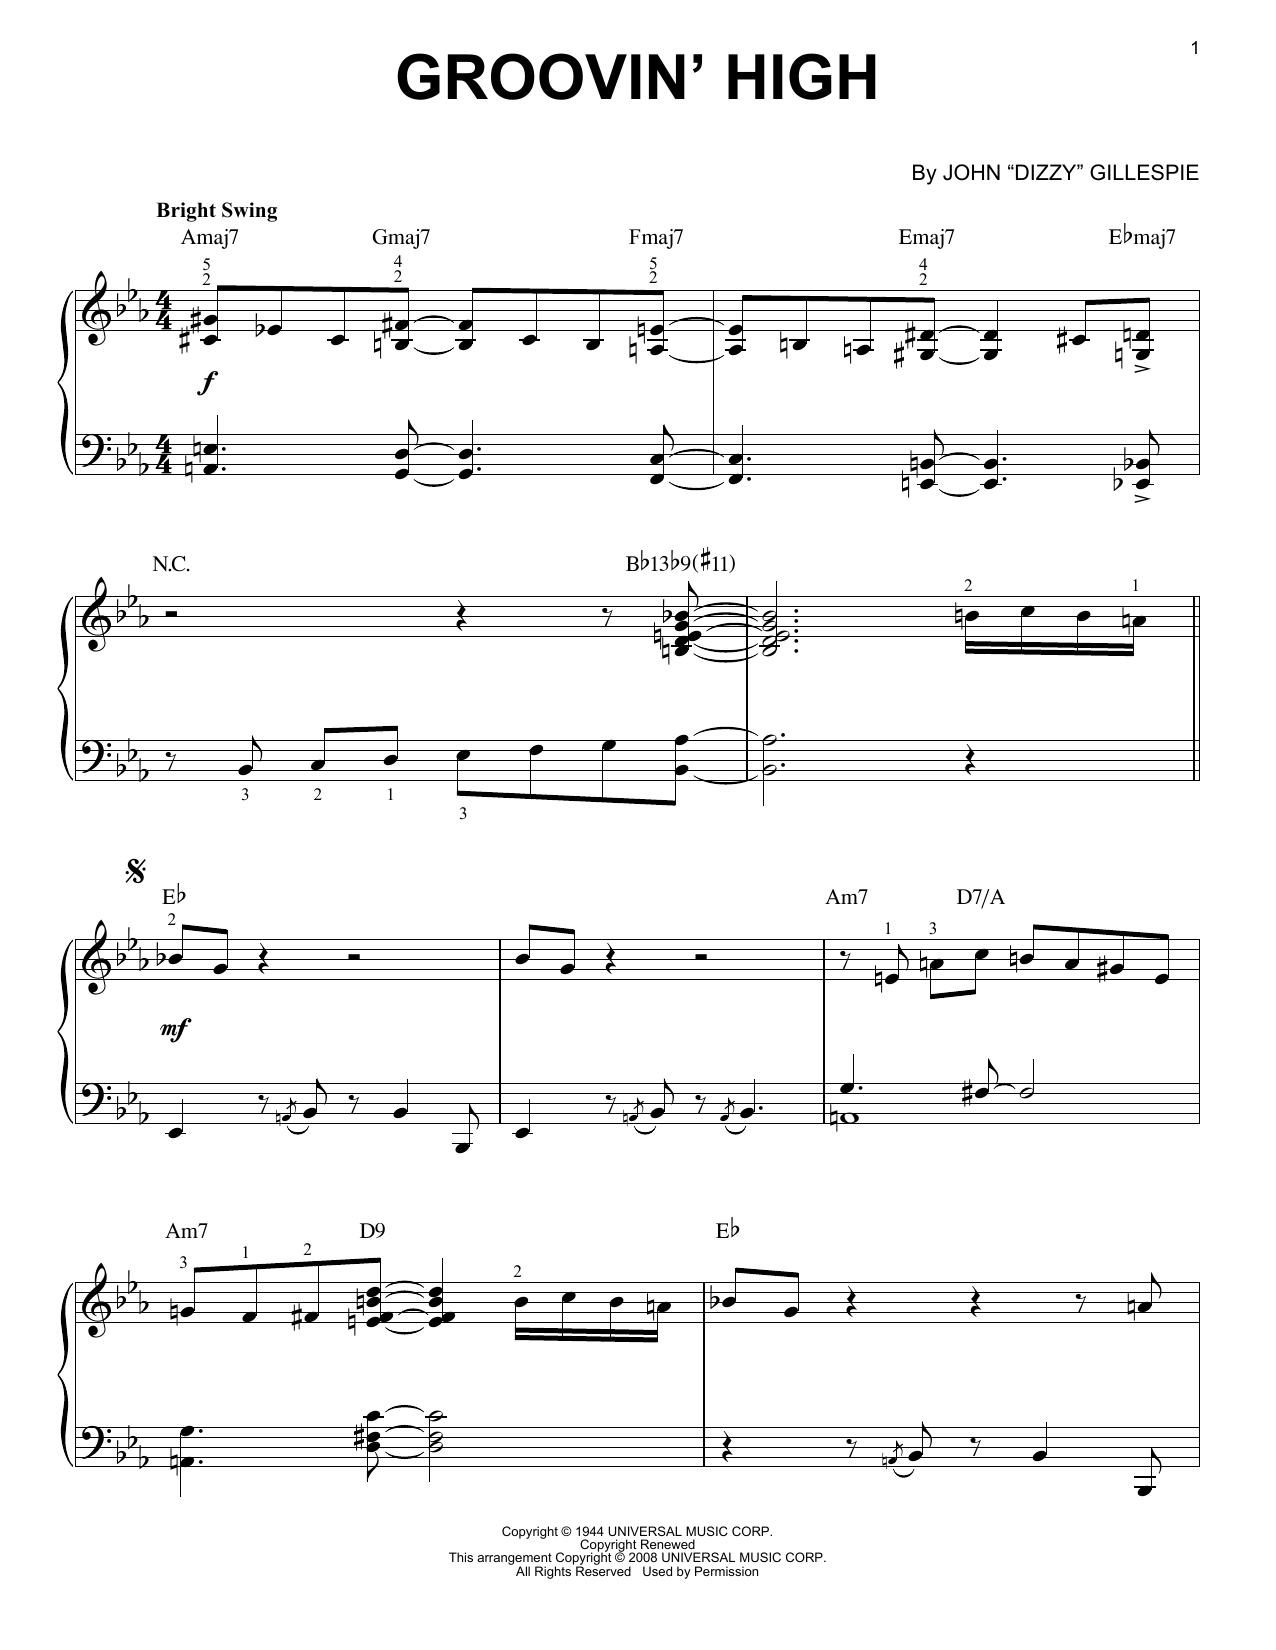 Charlie Parker Groovin' High Sheet Music Notes & Chords for Alto Sax Transcription - Download or Print PDF